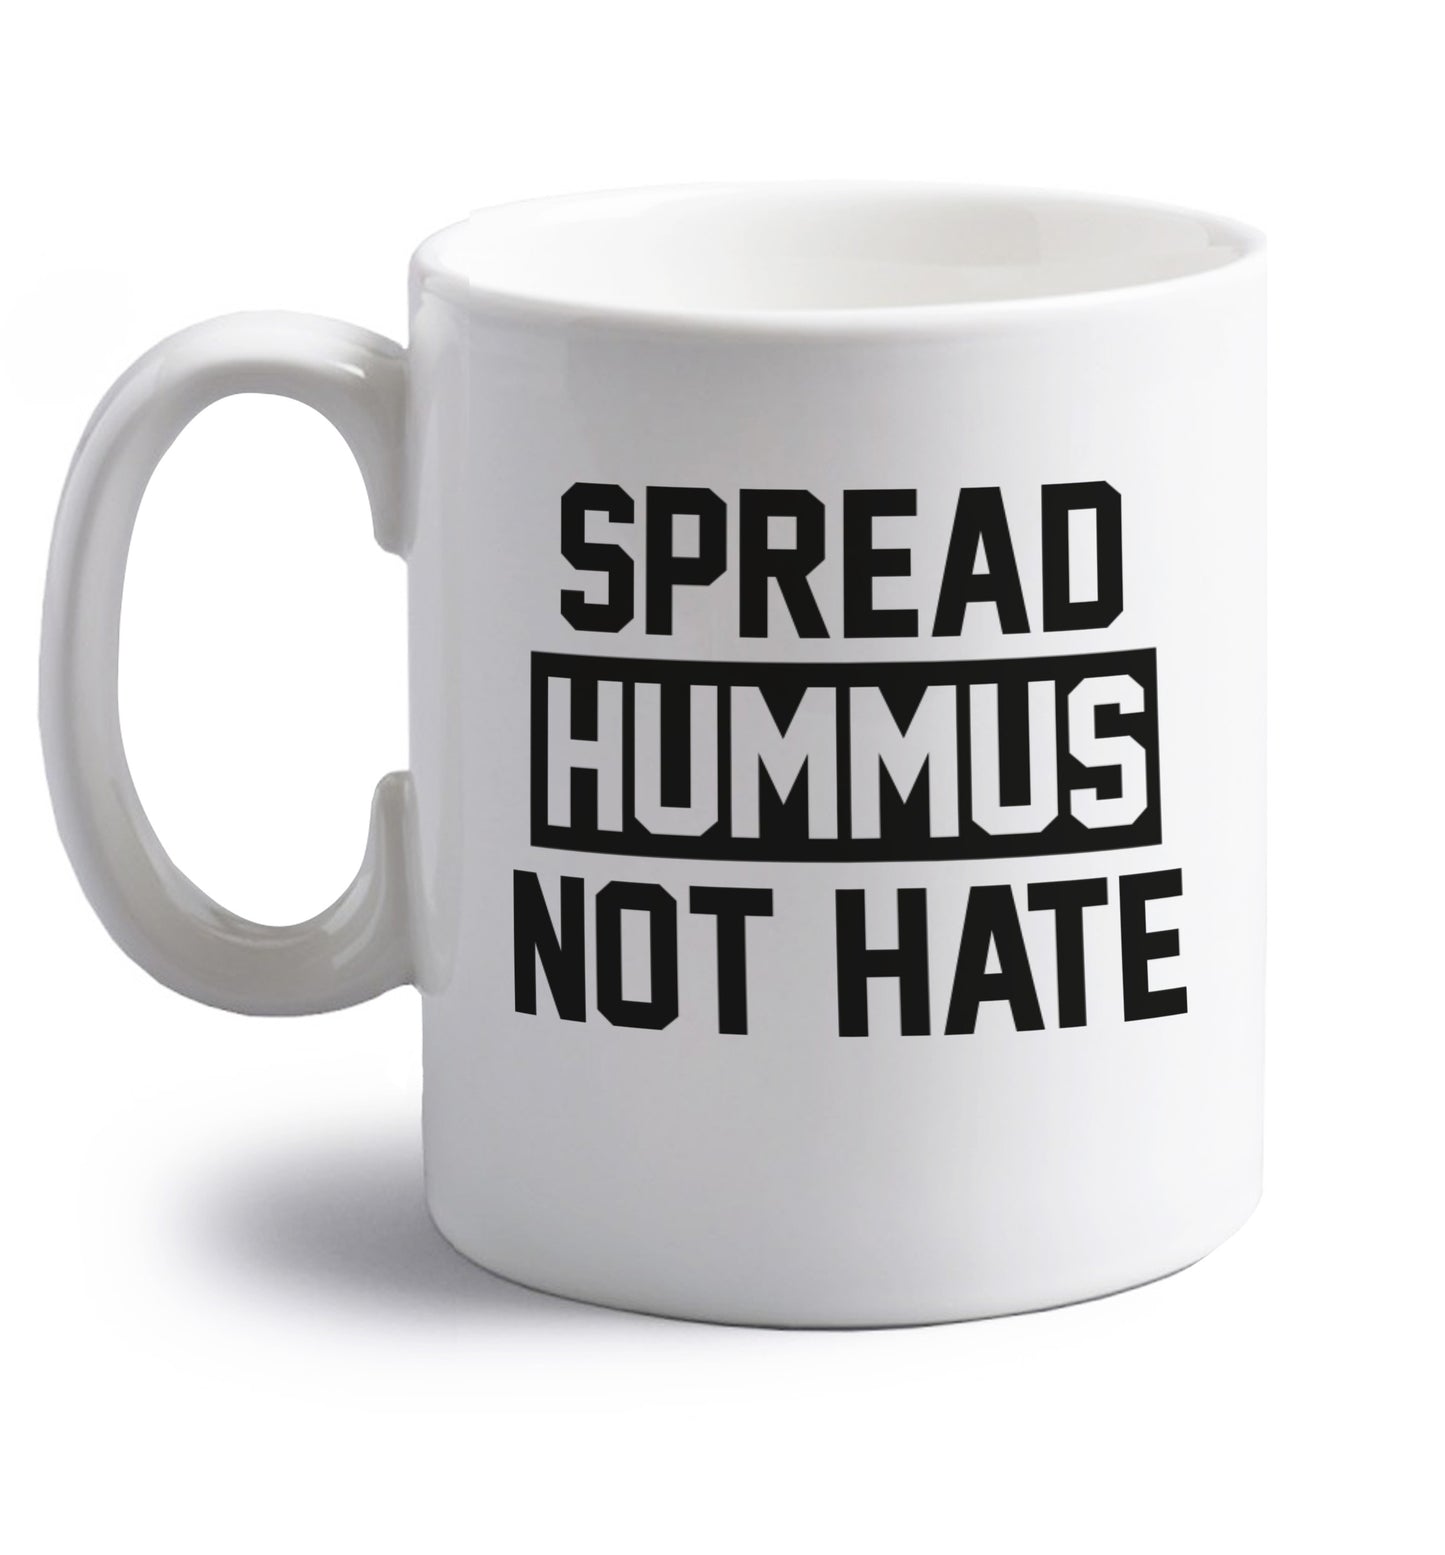 Spread hummus not hate right handed white ceramic mug 